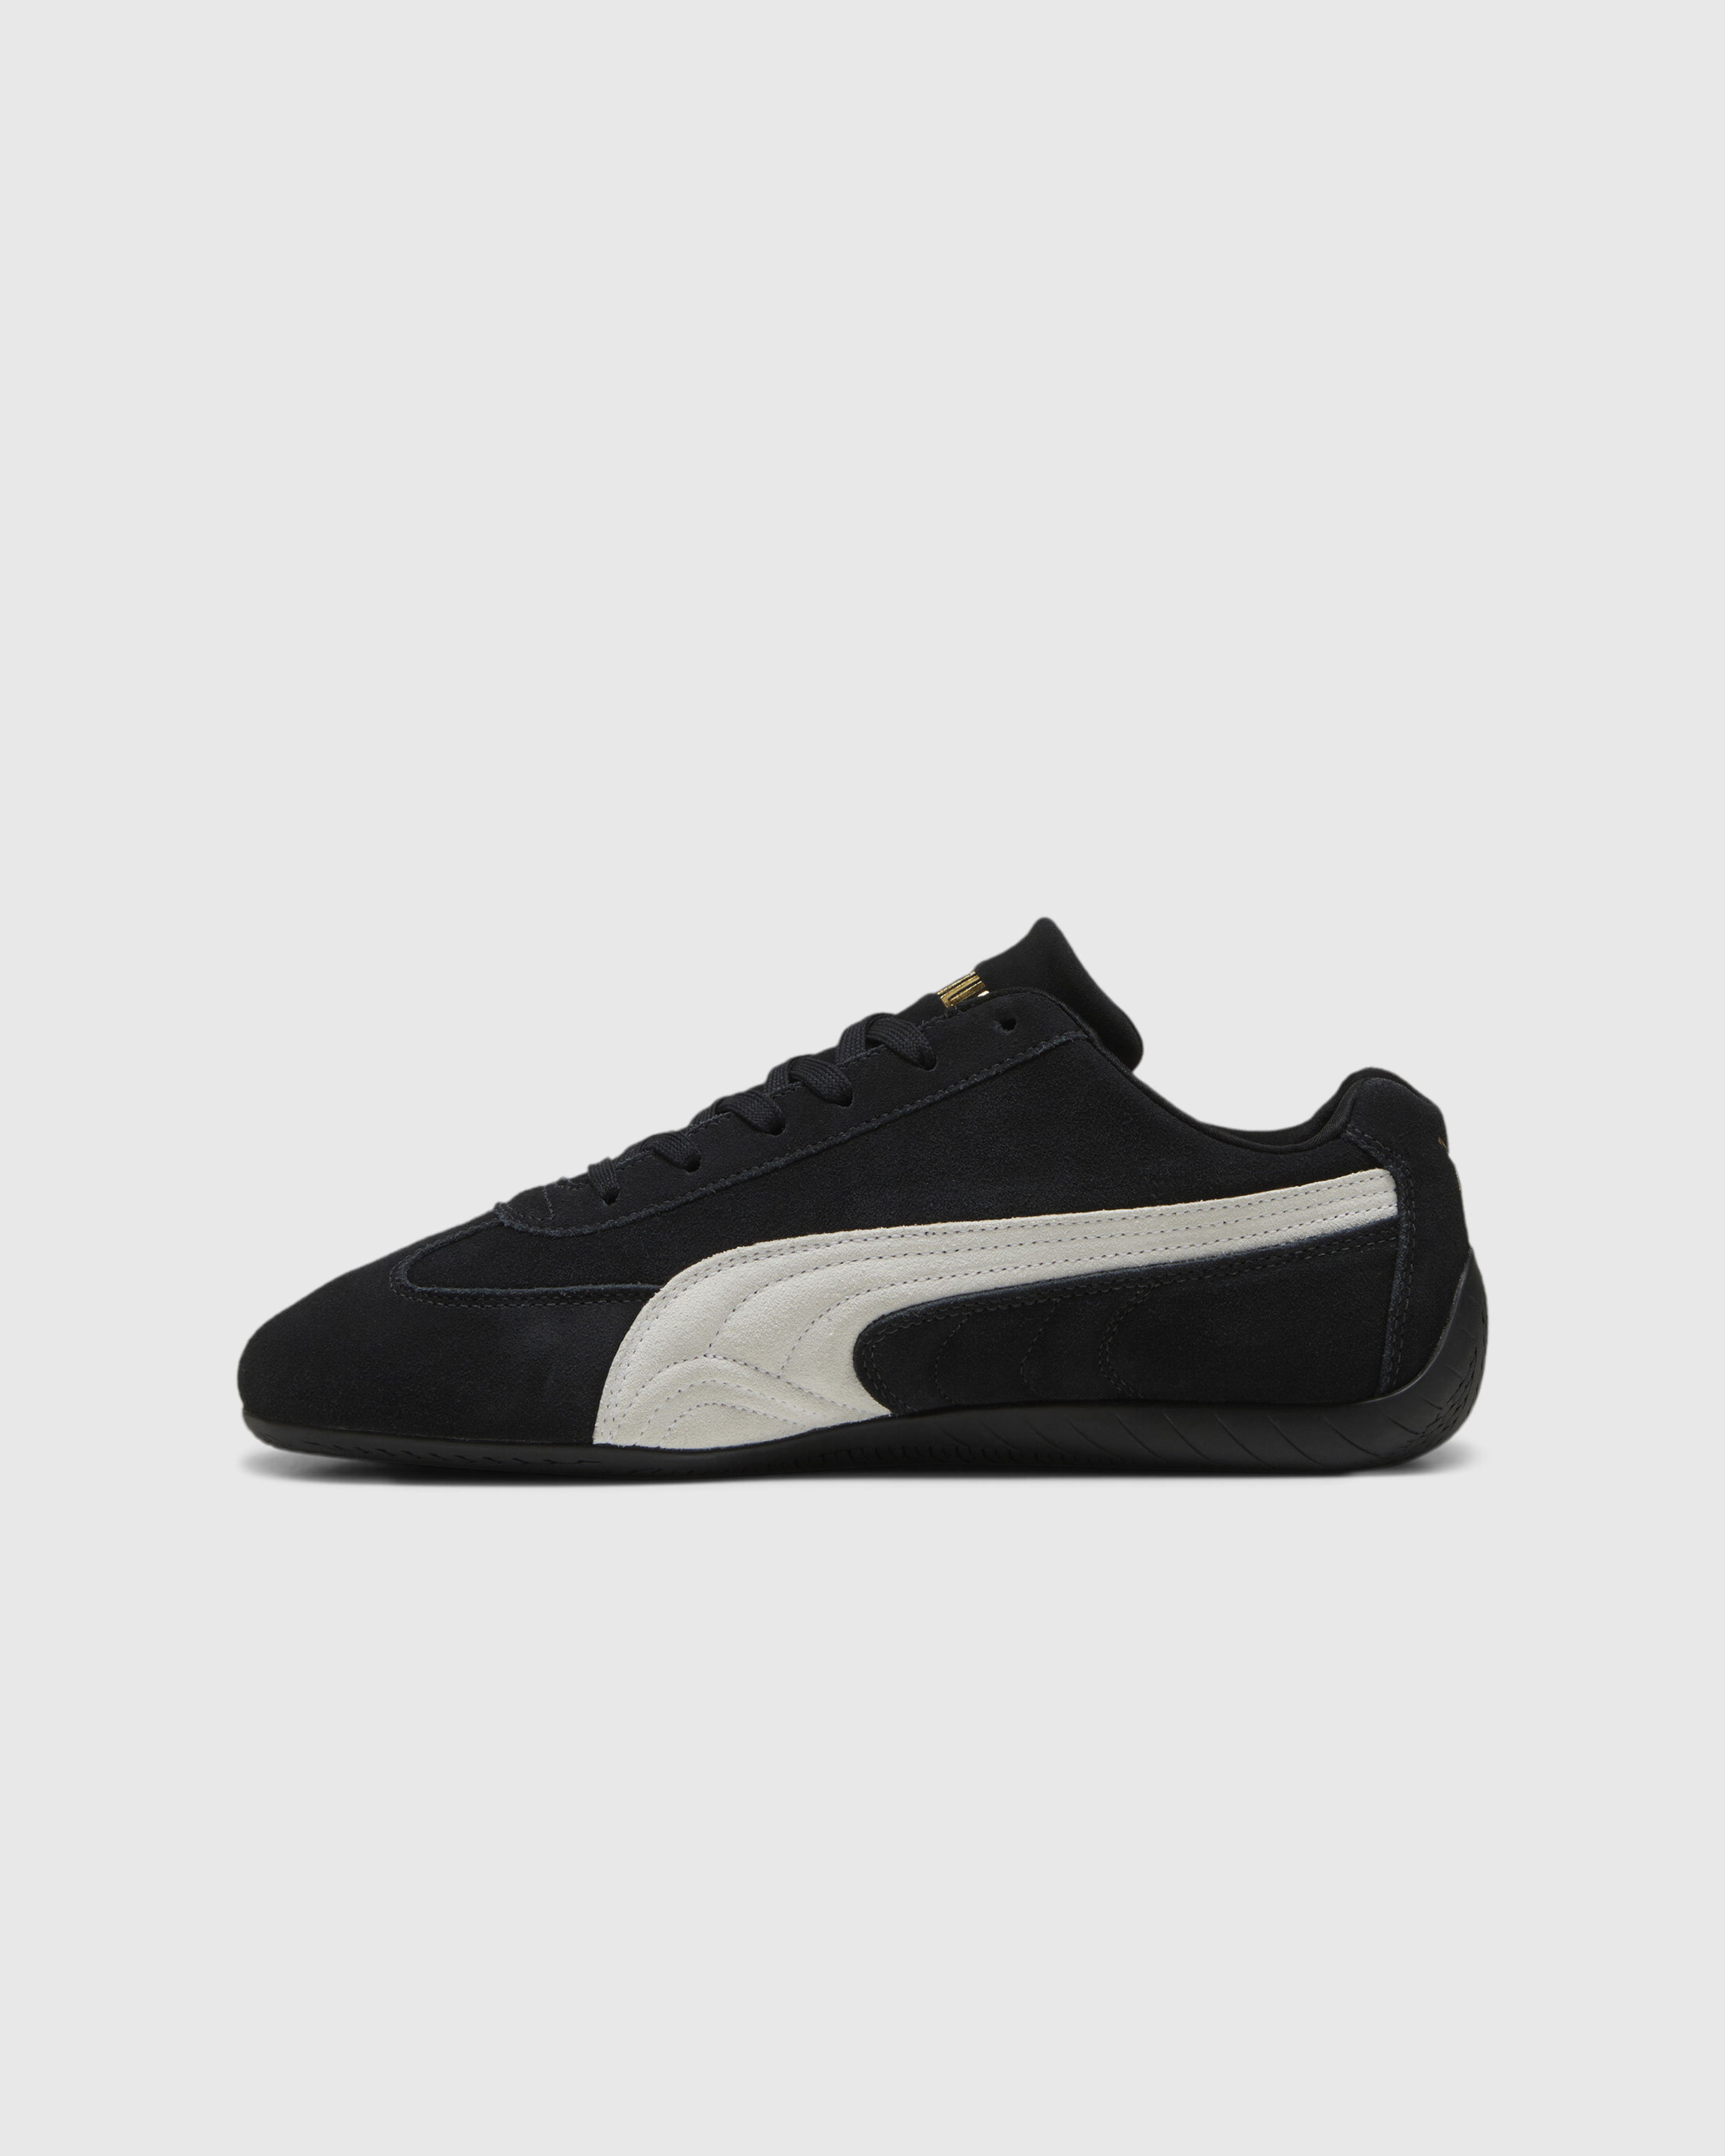 Puma – Speedcat OG Black/White - Low Top Sneakers - Black - Image 2